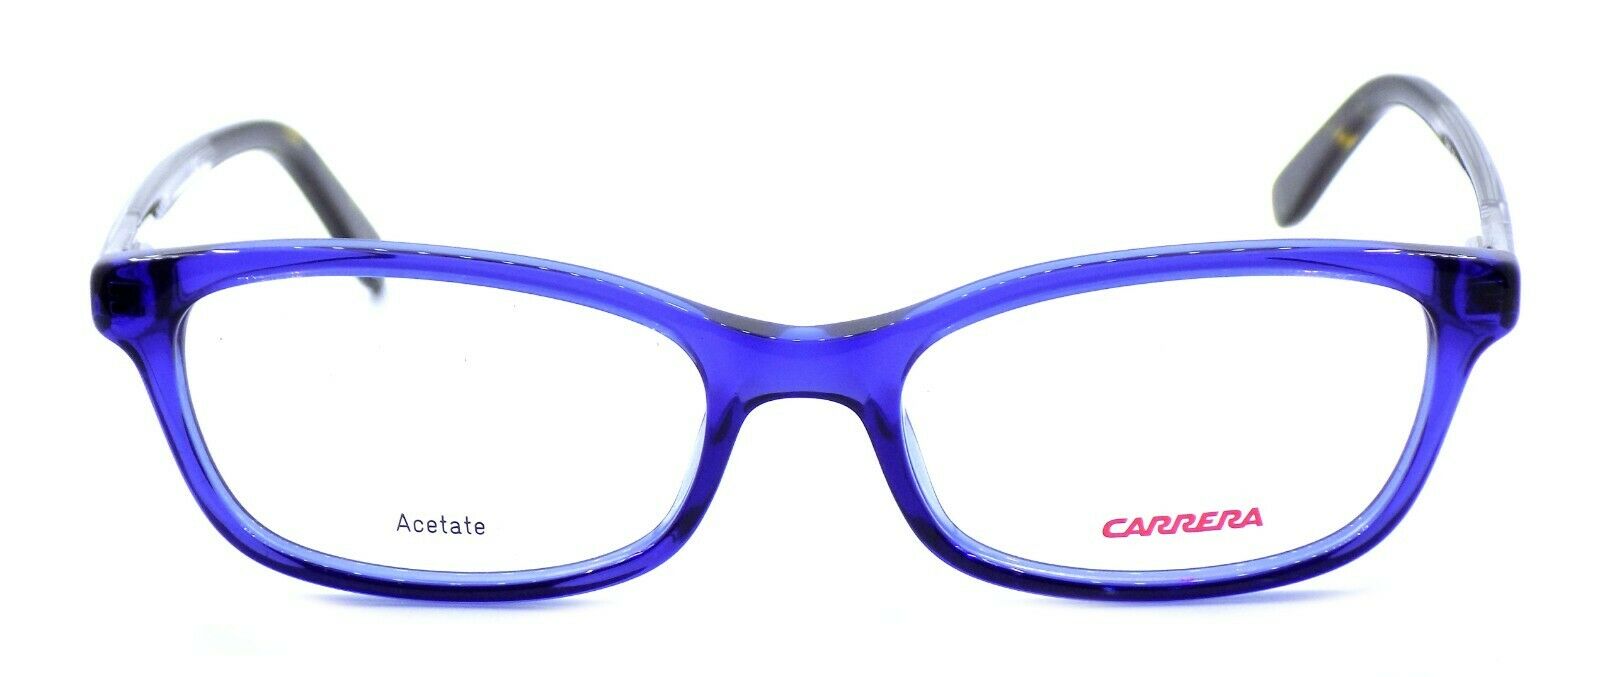 2-Carrera CA6647 QLD Women's Eyeglasses Frames 50-17-140 Blue + CASE-762753670441-IKSpecs